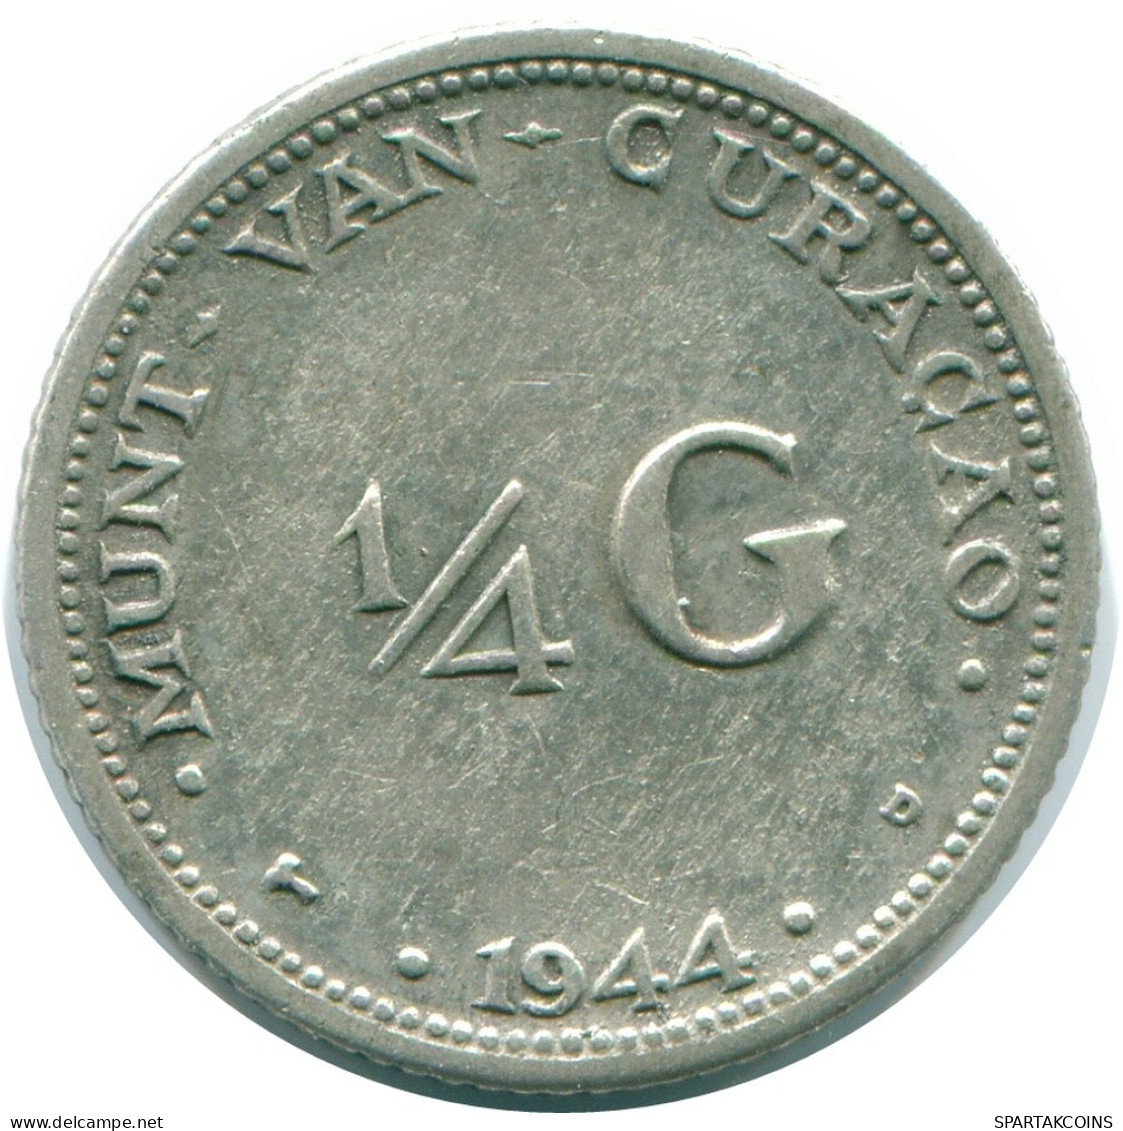 1/4 GULDEN 1944 CURACAO Netherlands SILVER Colonial Coin #NL10683.4.U - Curaçao